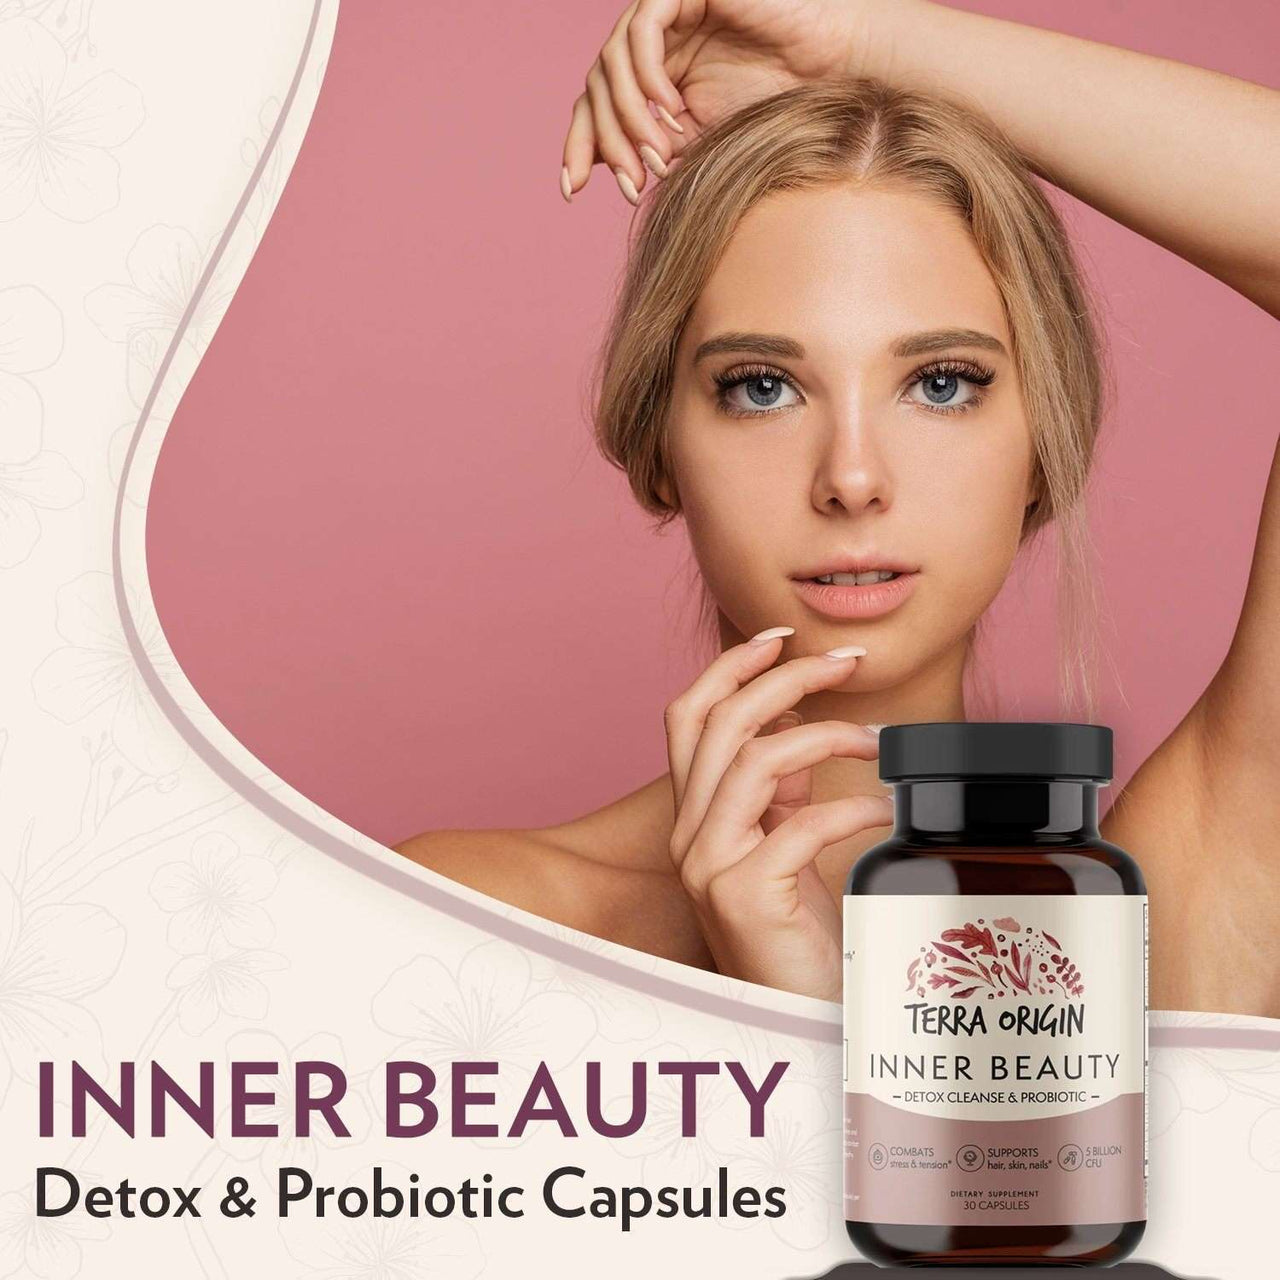 Inner Beauty Detox Cleanse & Probiotic Capsules